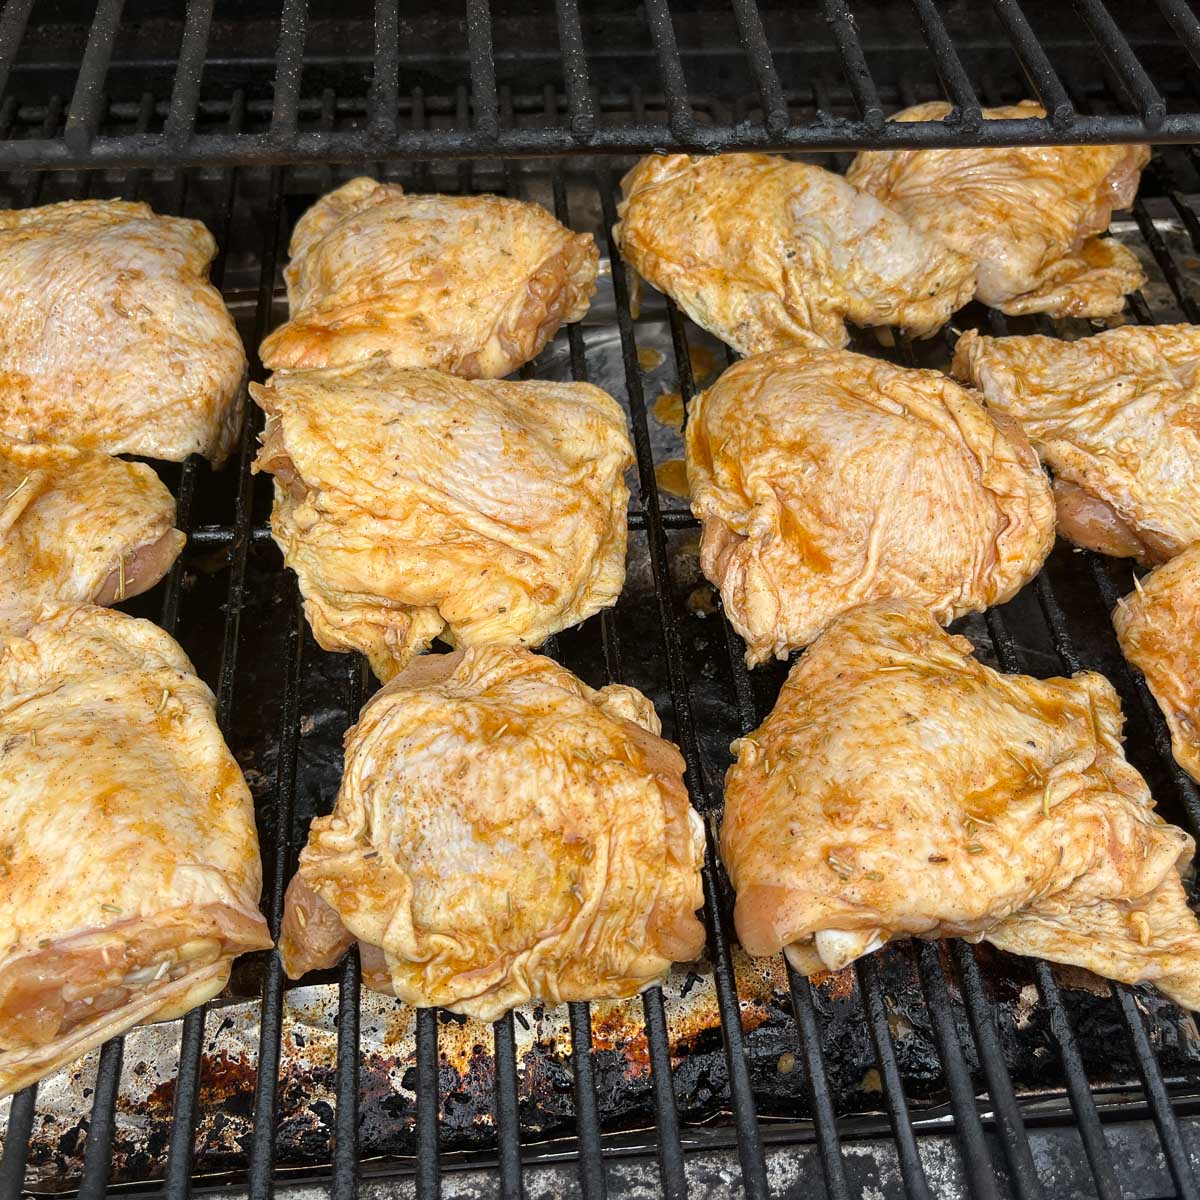 raw marinated chicken thighs being smoked